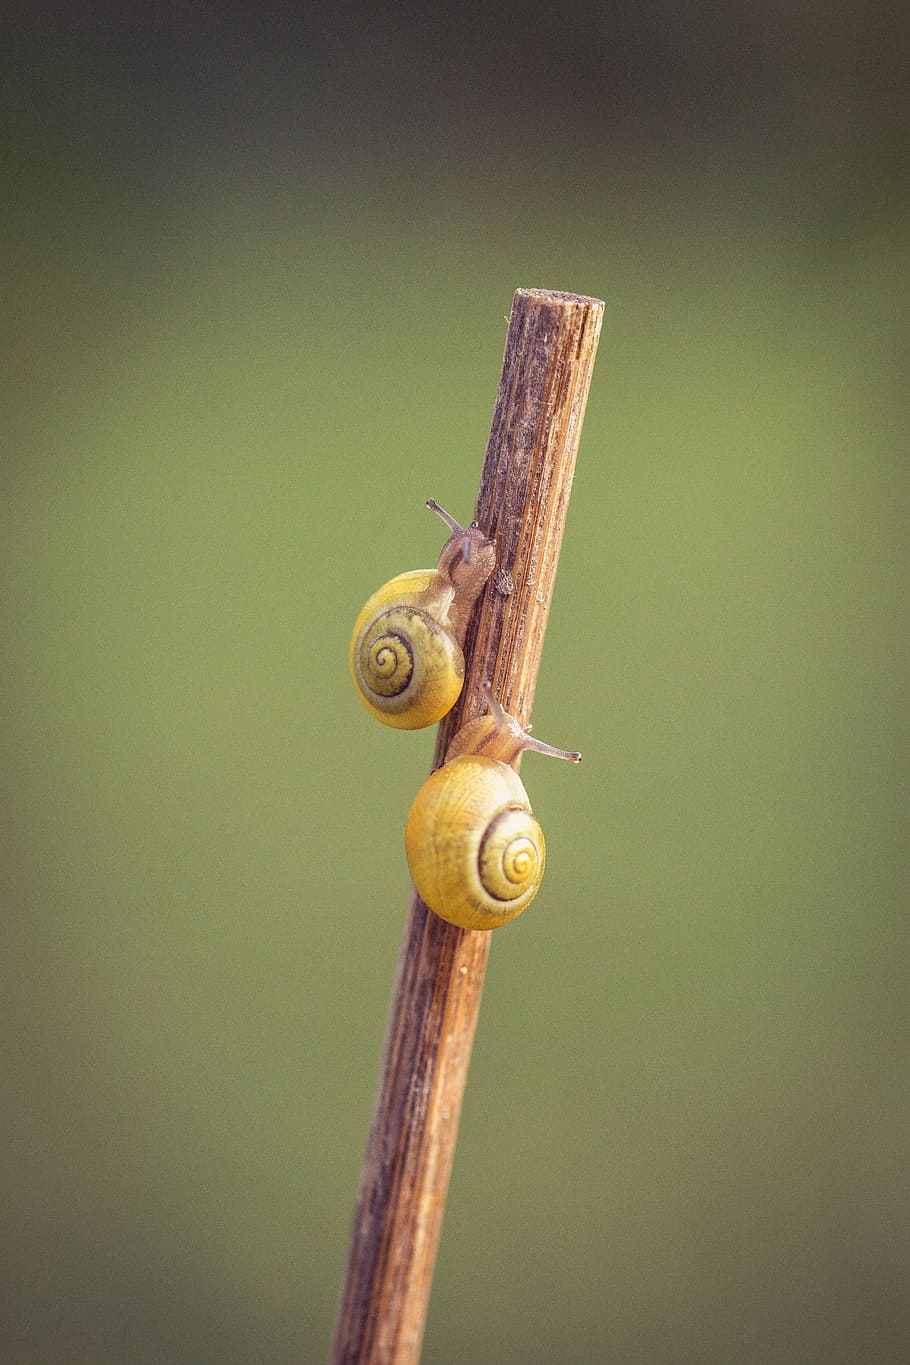 two, snails, crawling, stick, yellow, shell, close, garden, housing, spiral